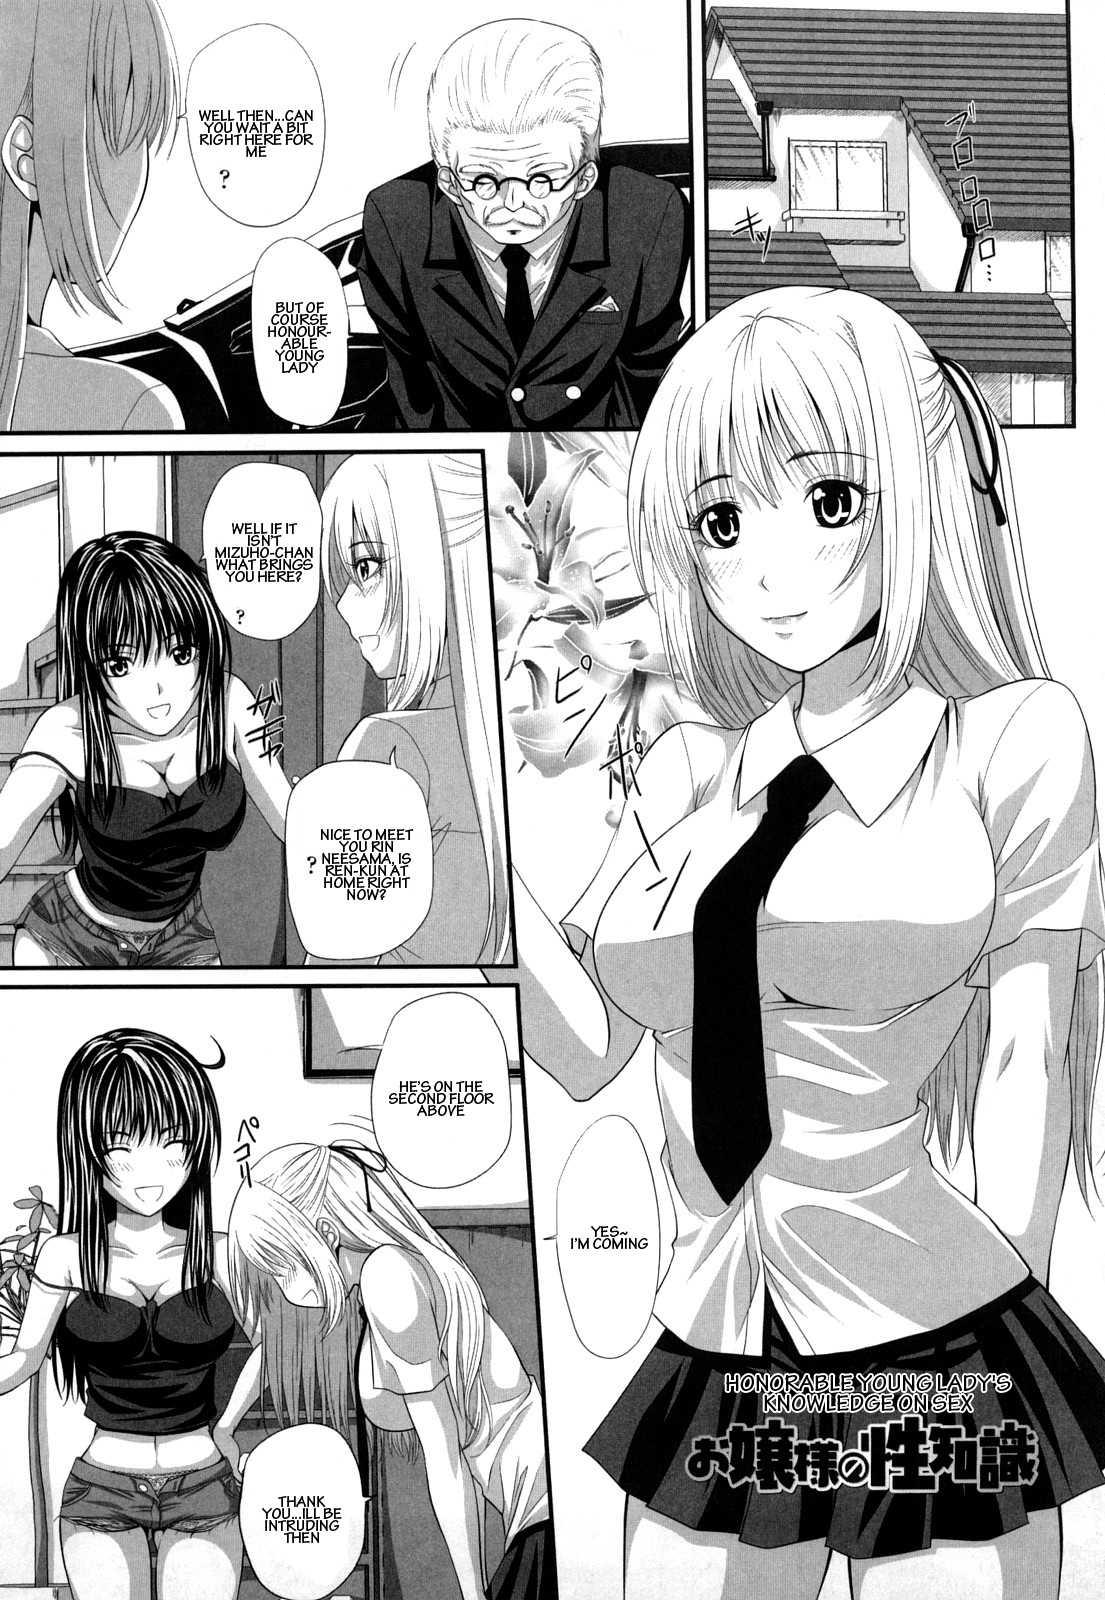 Sex manga young Hentai ::